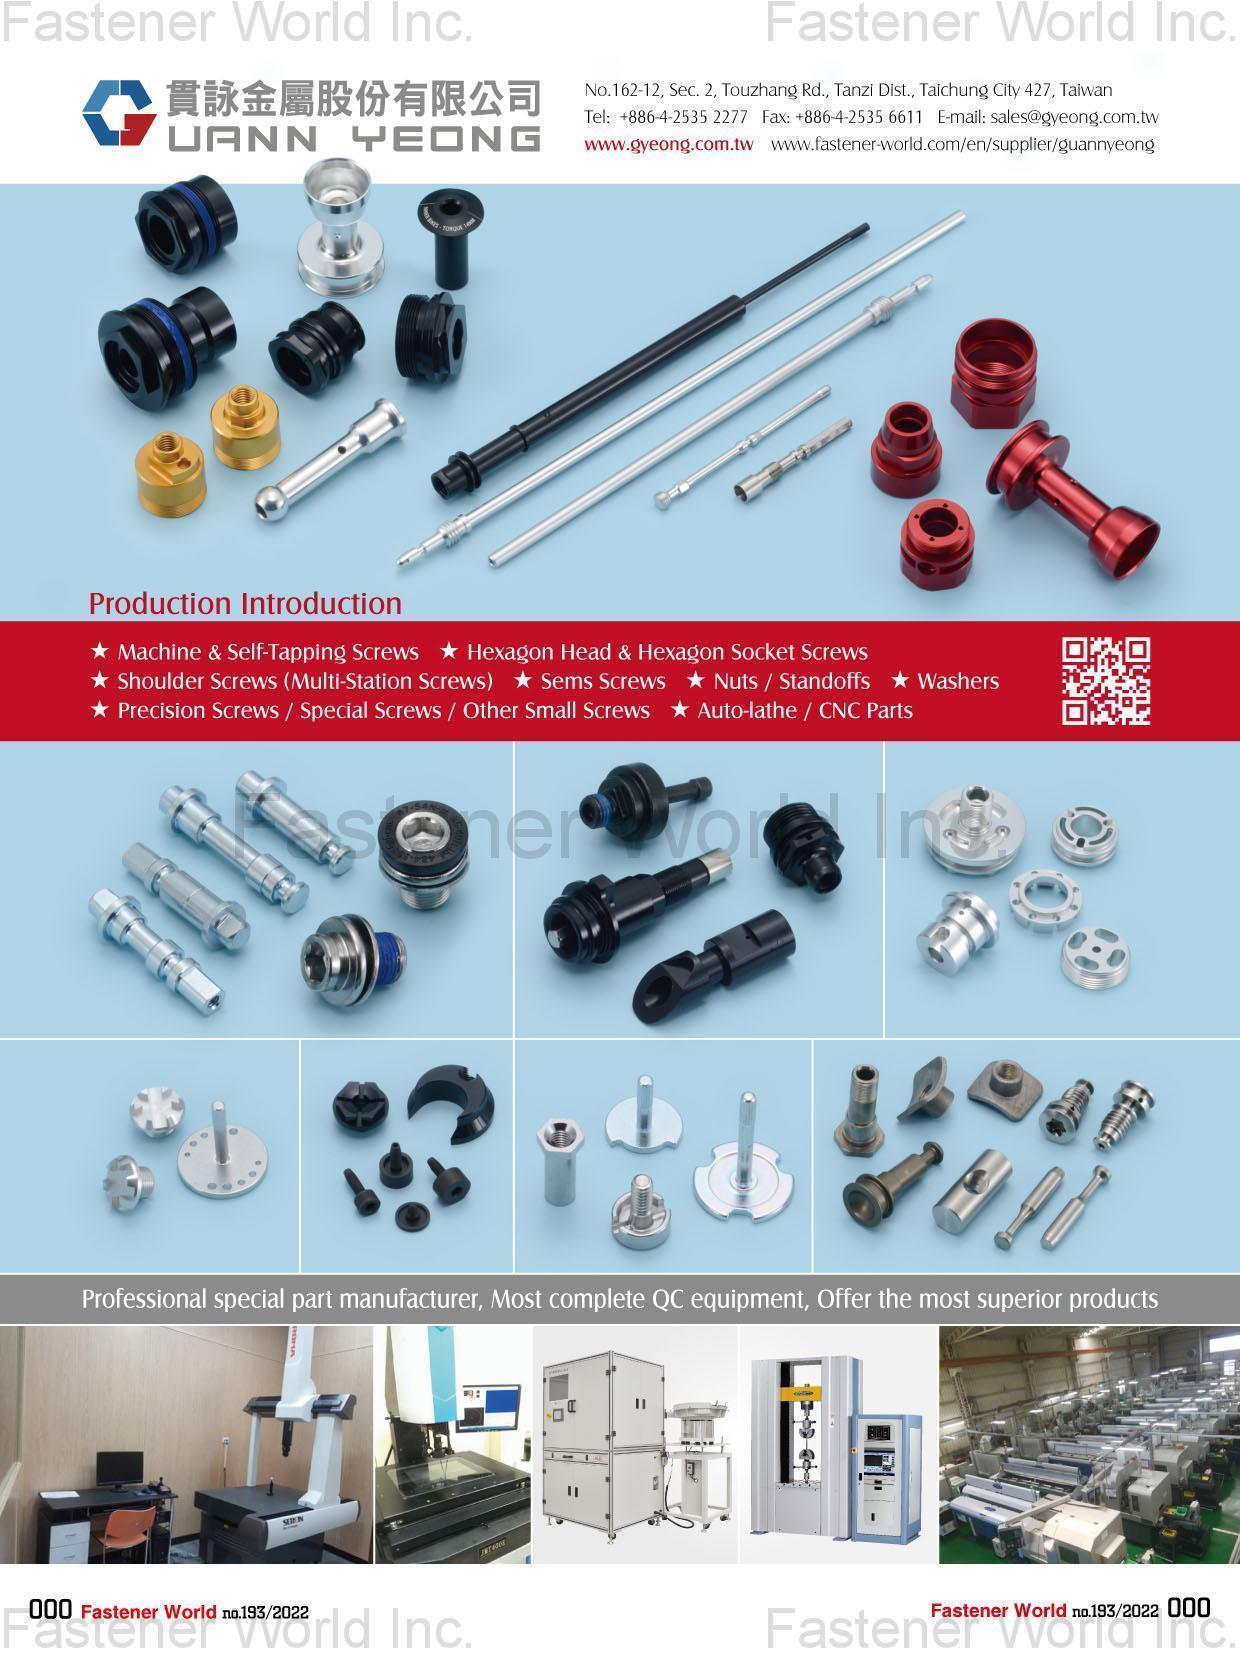 Guann Yeong Metal Co., Ltd. , Machine & Self-Tapping Screws, Hexagon Head & Hexagon Socket Screws, Shoulder Screws (Multi-Station Screws), Sems Screws, Nuts, Standoffs, Washers, Precision Screws, Special Screws, Other Small Screws, Auto-lathe, CNC Parts